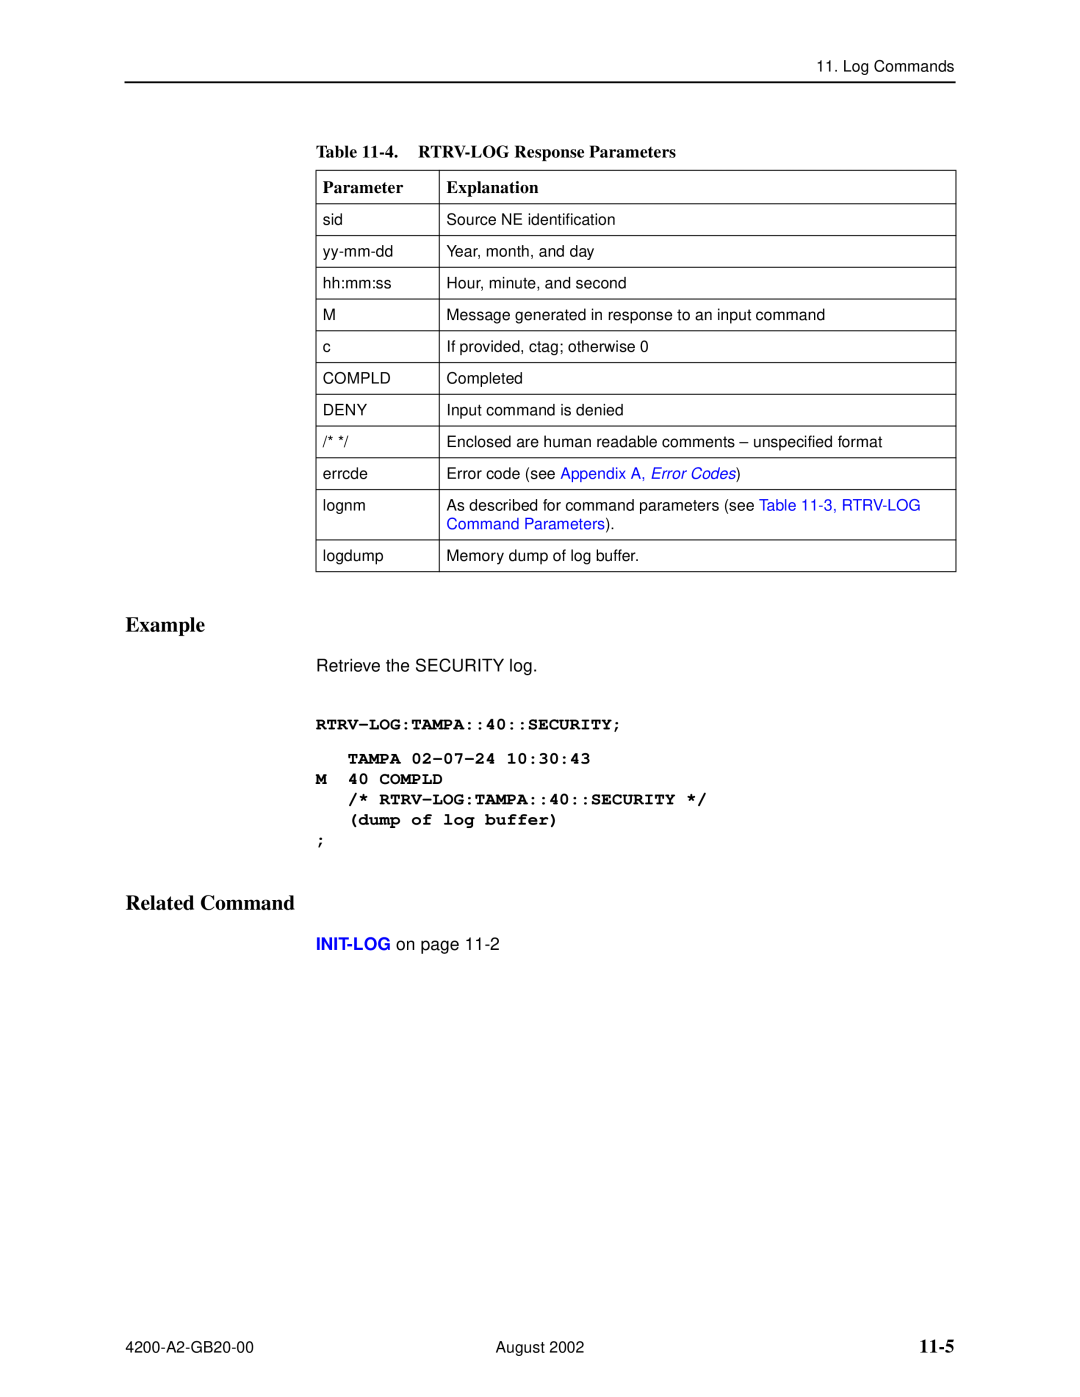 Paradyne 4200 manual 11-5, 4. RTRV-LOG Response Parameters, RTRV-LOGTAMPA40SECURITY TAMPA 02-07-24 M 40 COMPLD, Example 